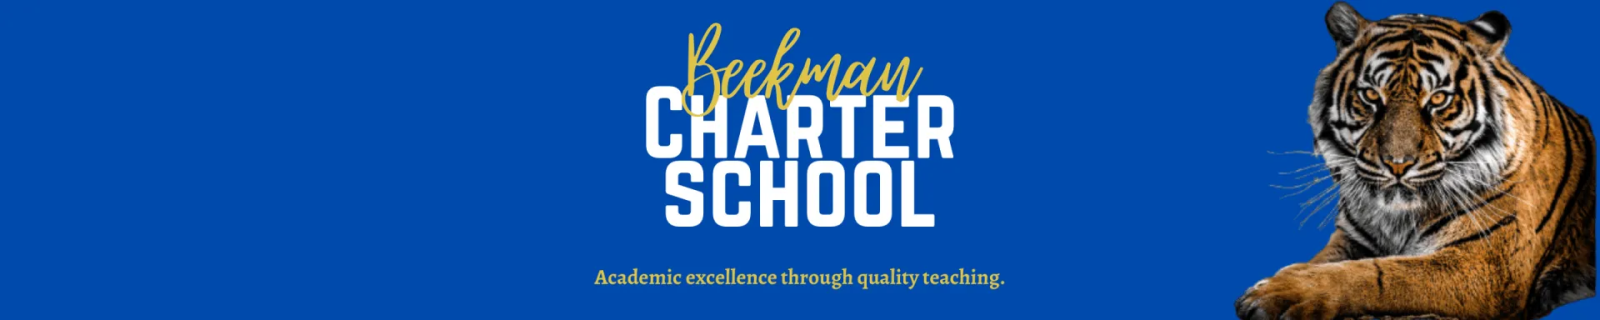 Beekman Charter School